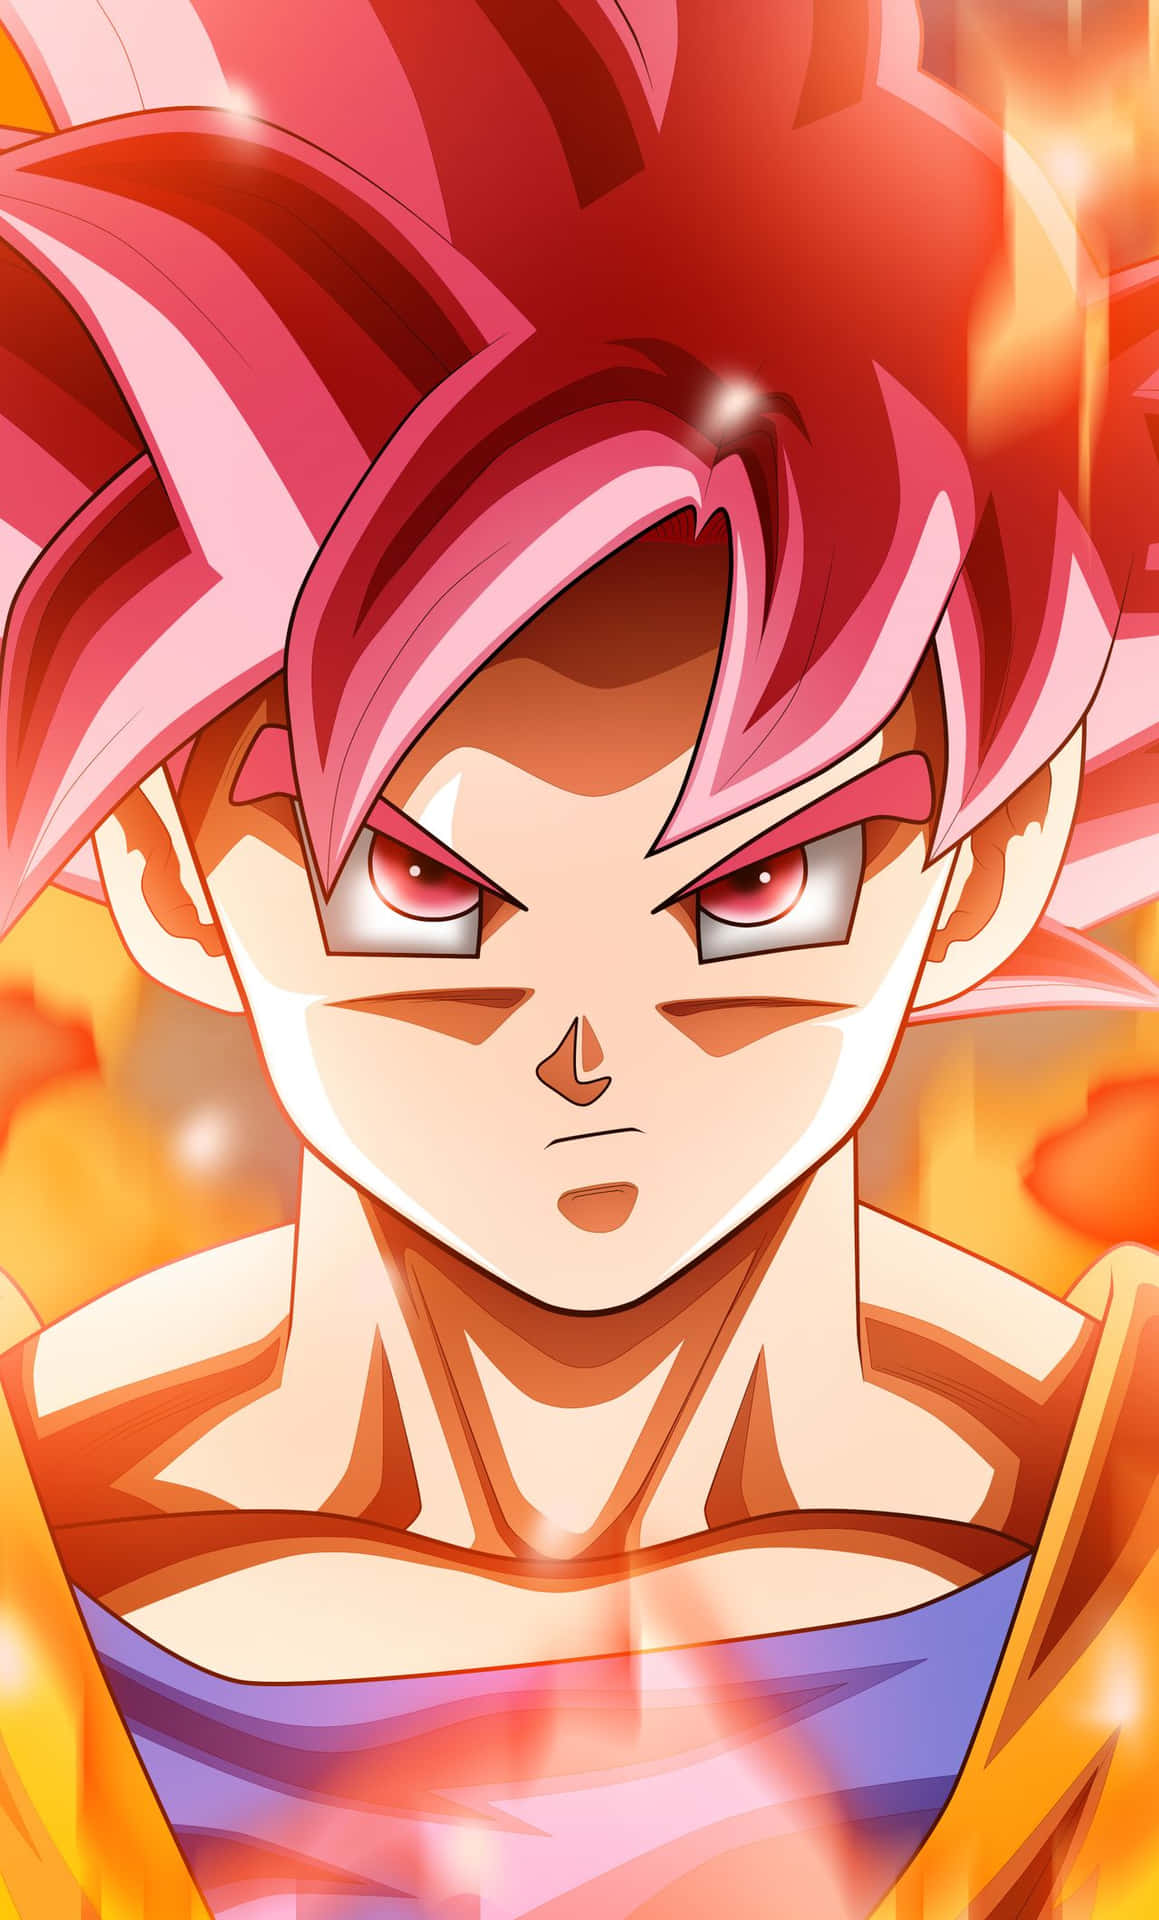 Terrific Super Saiyan Goku Dragon Ball Super iPhone Wallpaper